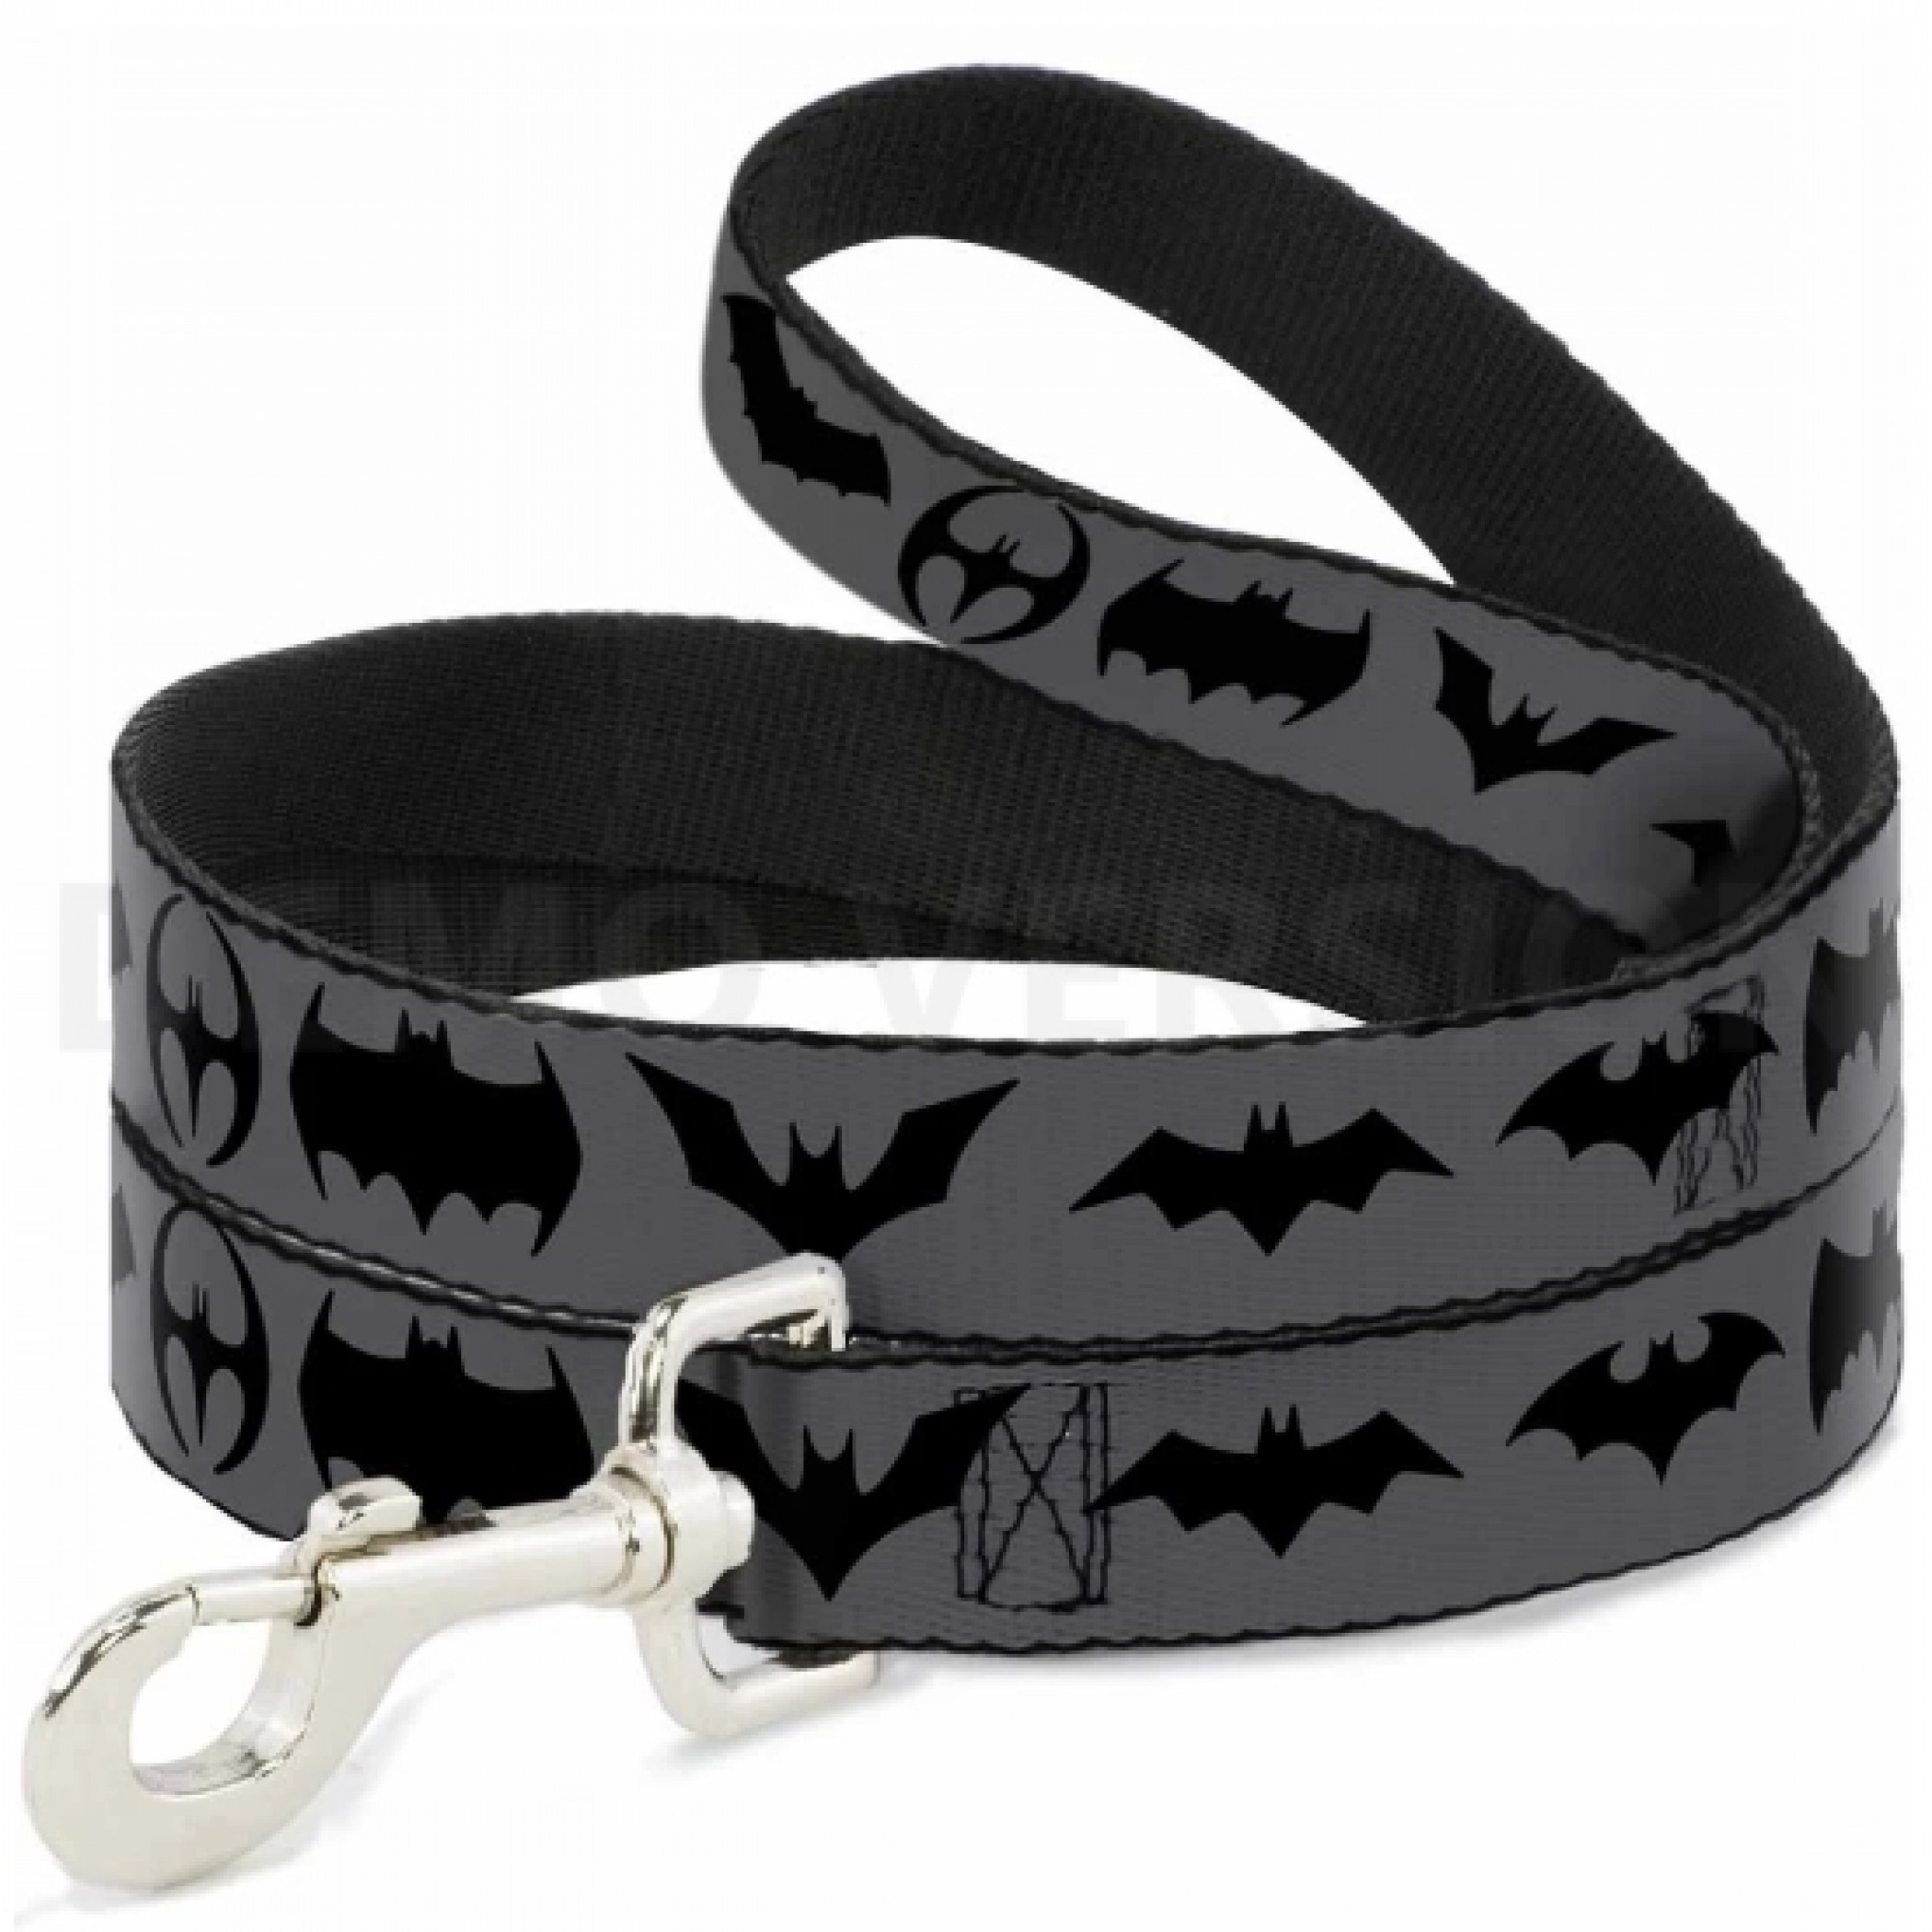 Batman Logos Grey and Black 4-Foot Dog Leash